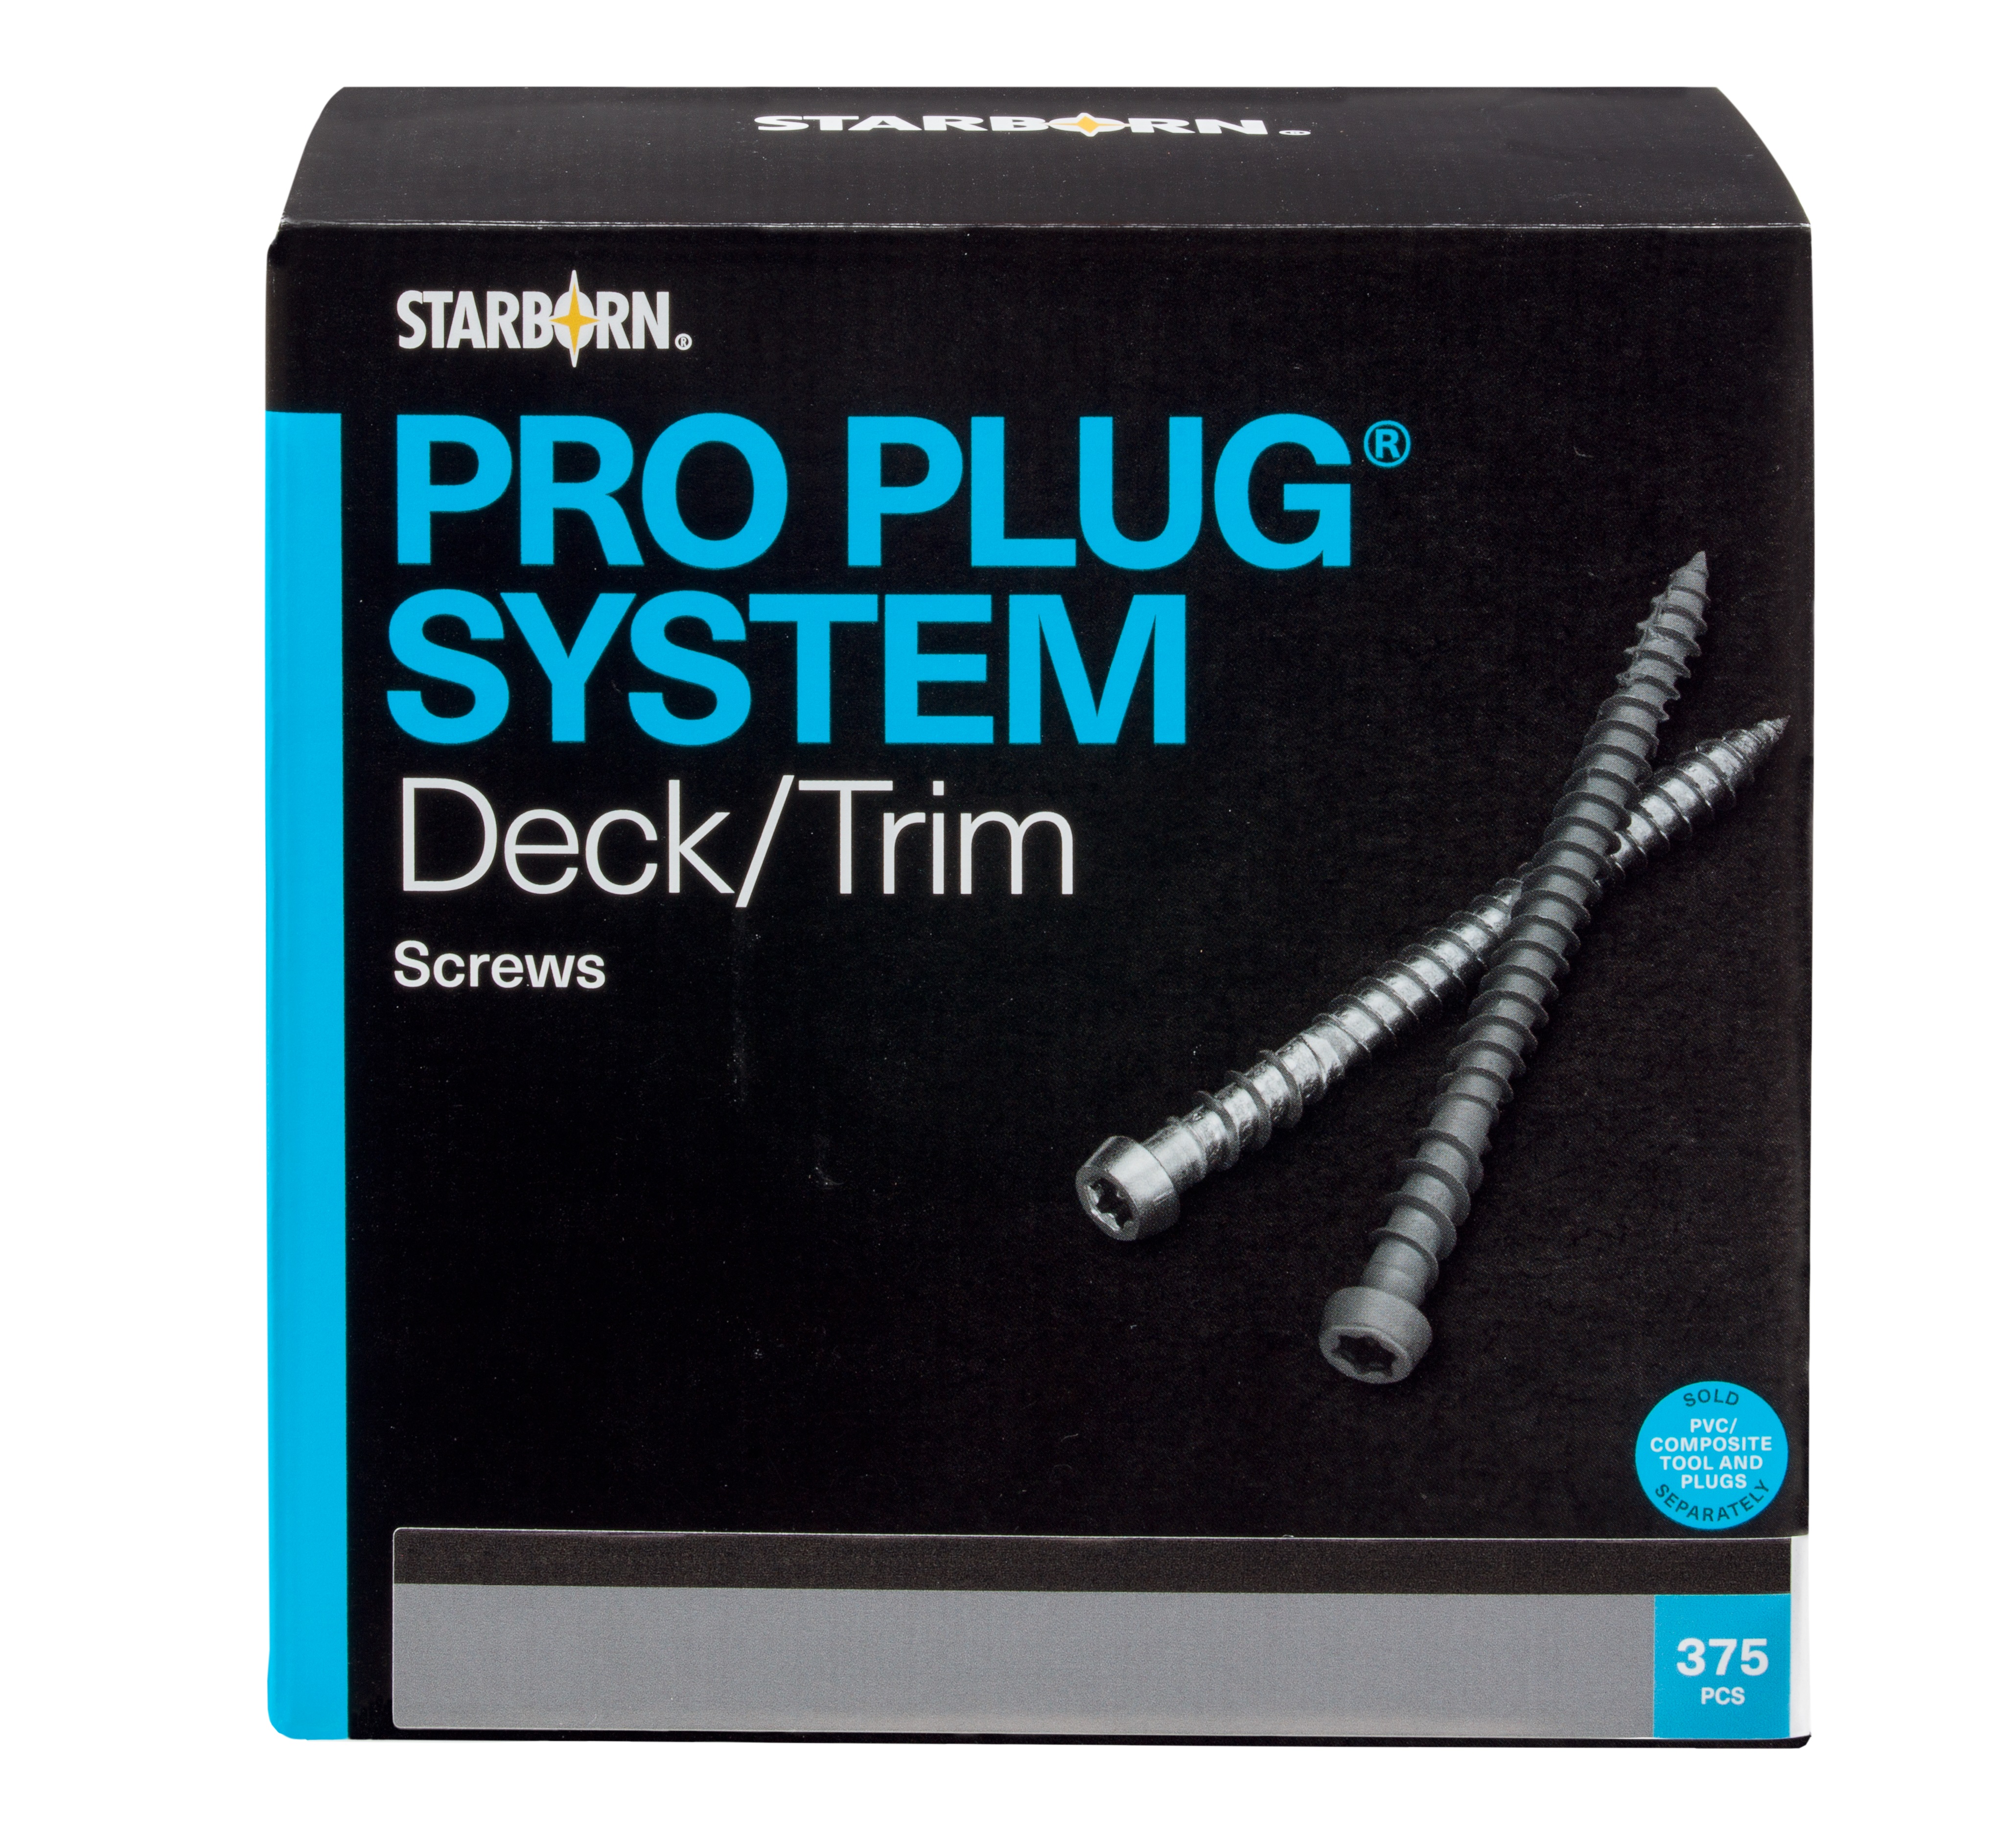 Pro Plug System Screws - 375 piece packs for 100 sq ft